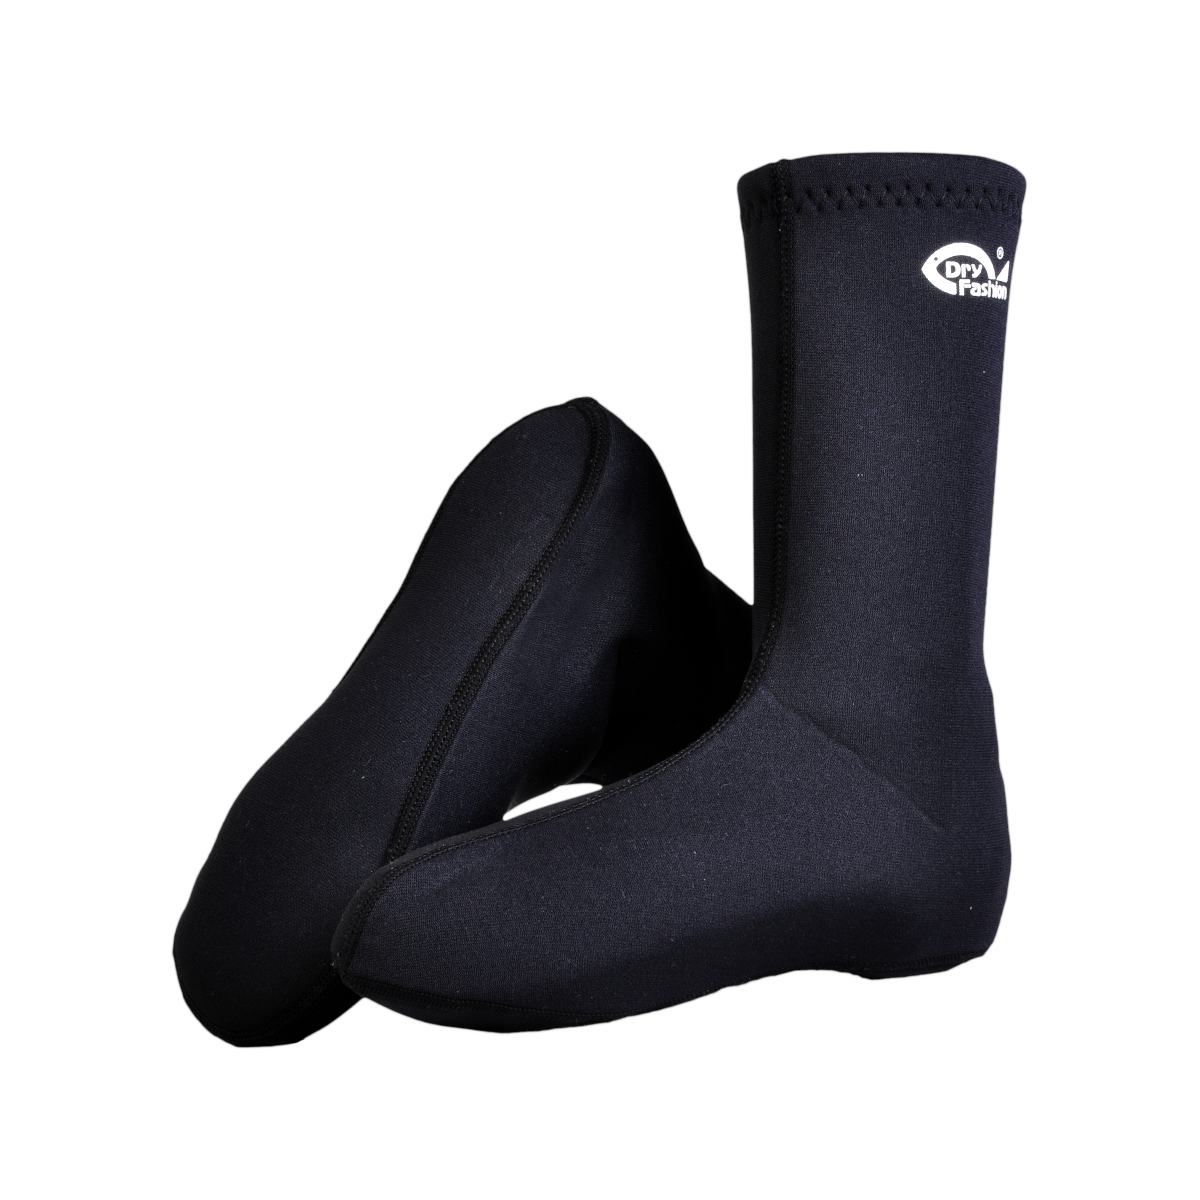 Dry Fashion neopreen sokken zwart, maat 42